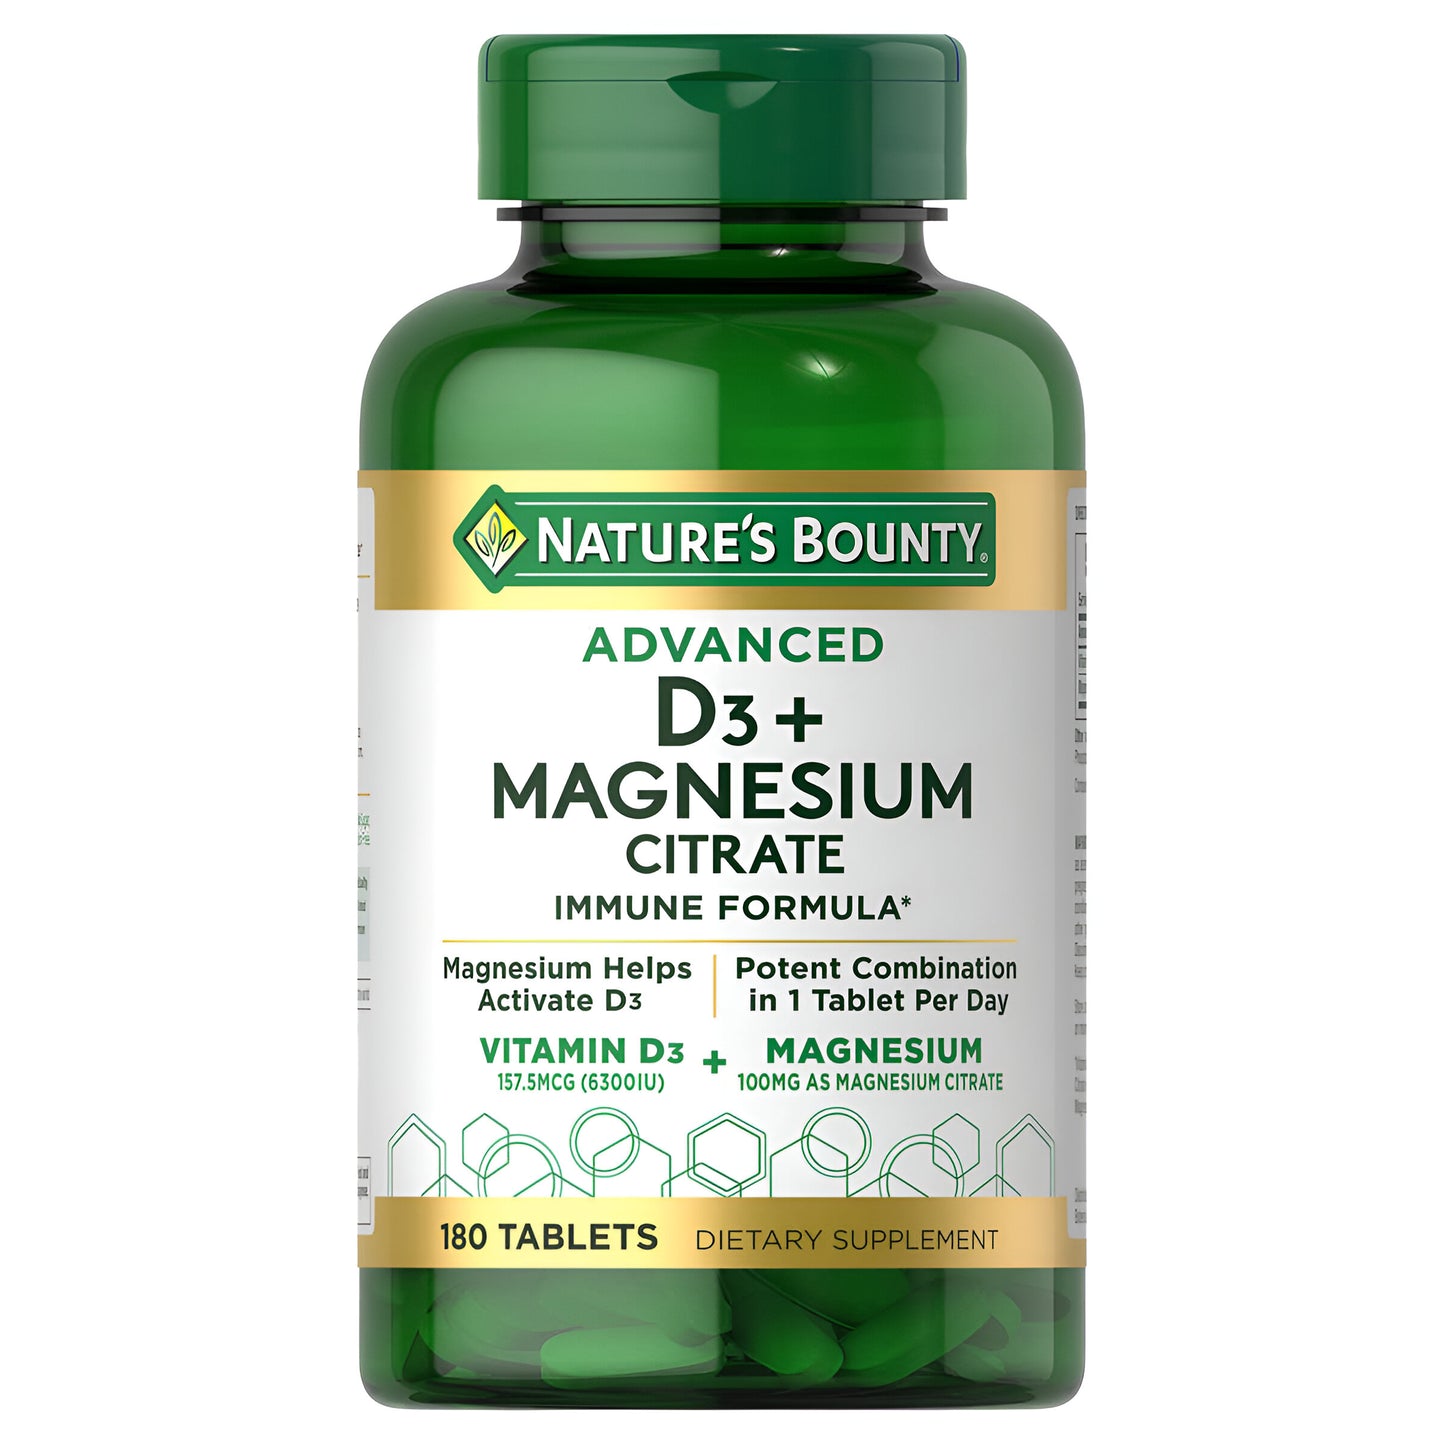 Nature's Bounty Advanced D3 + fórmula inmune de citrato de magnesio, 180 tabletas